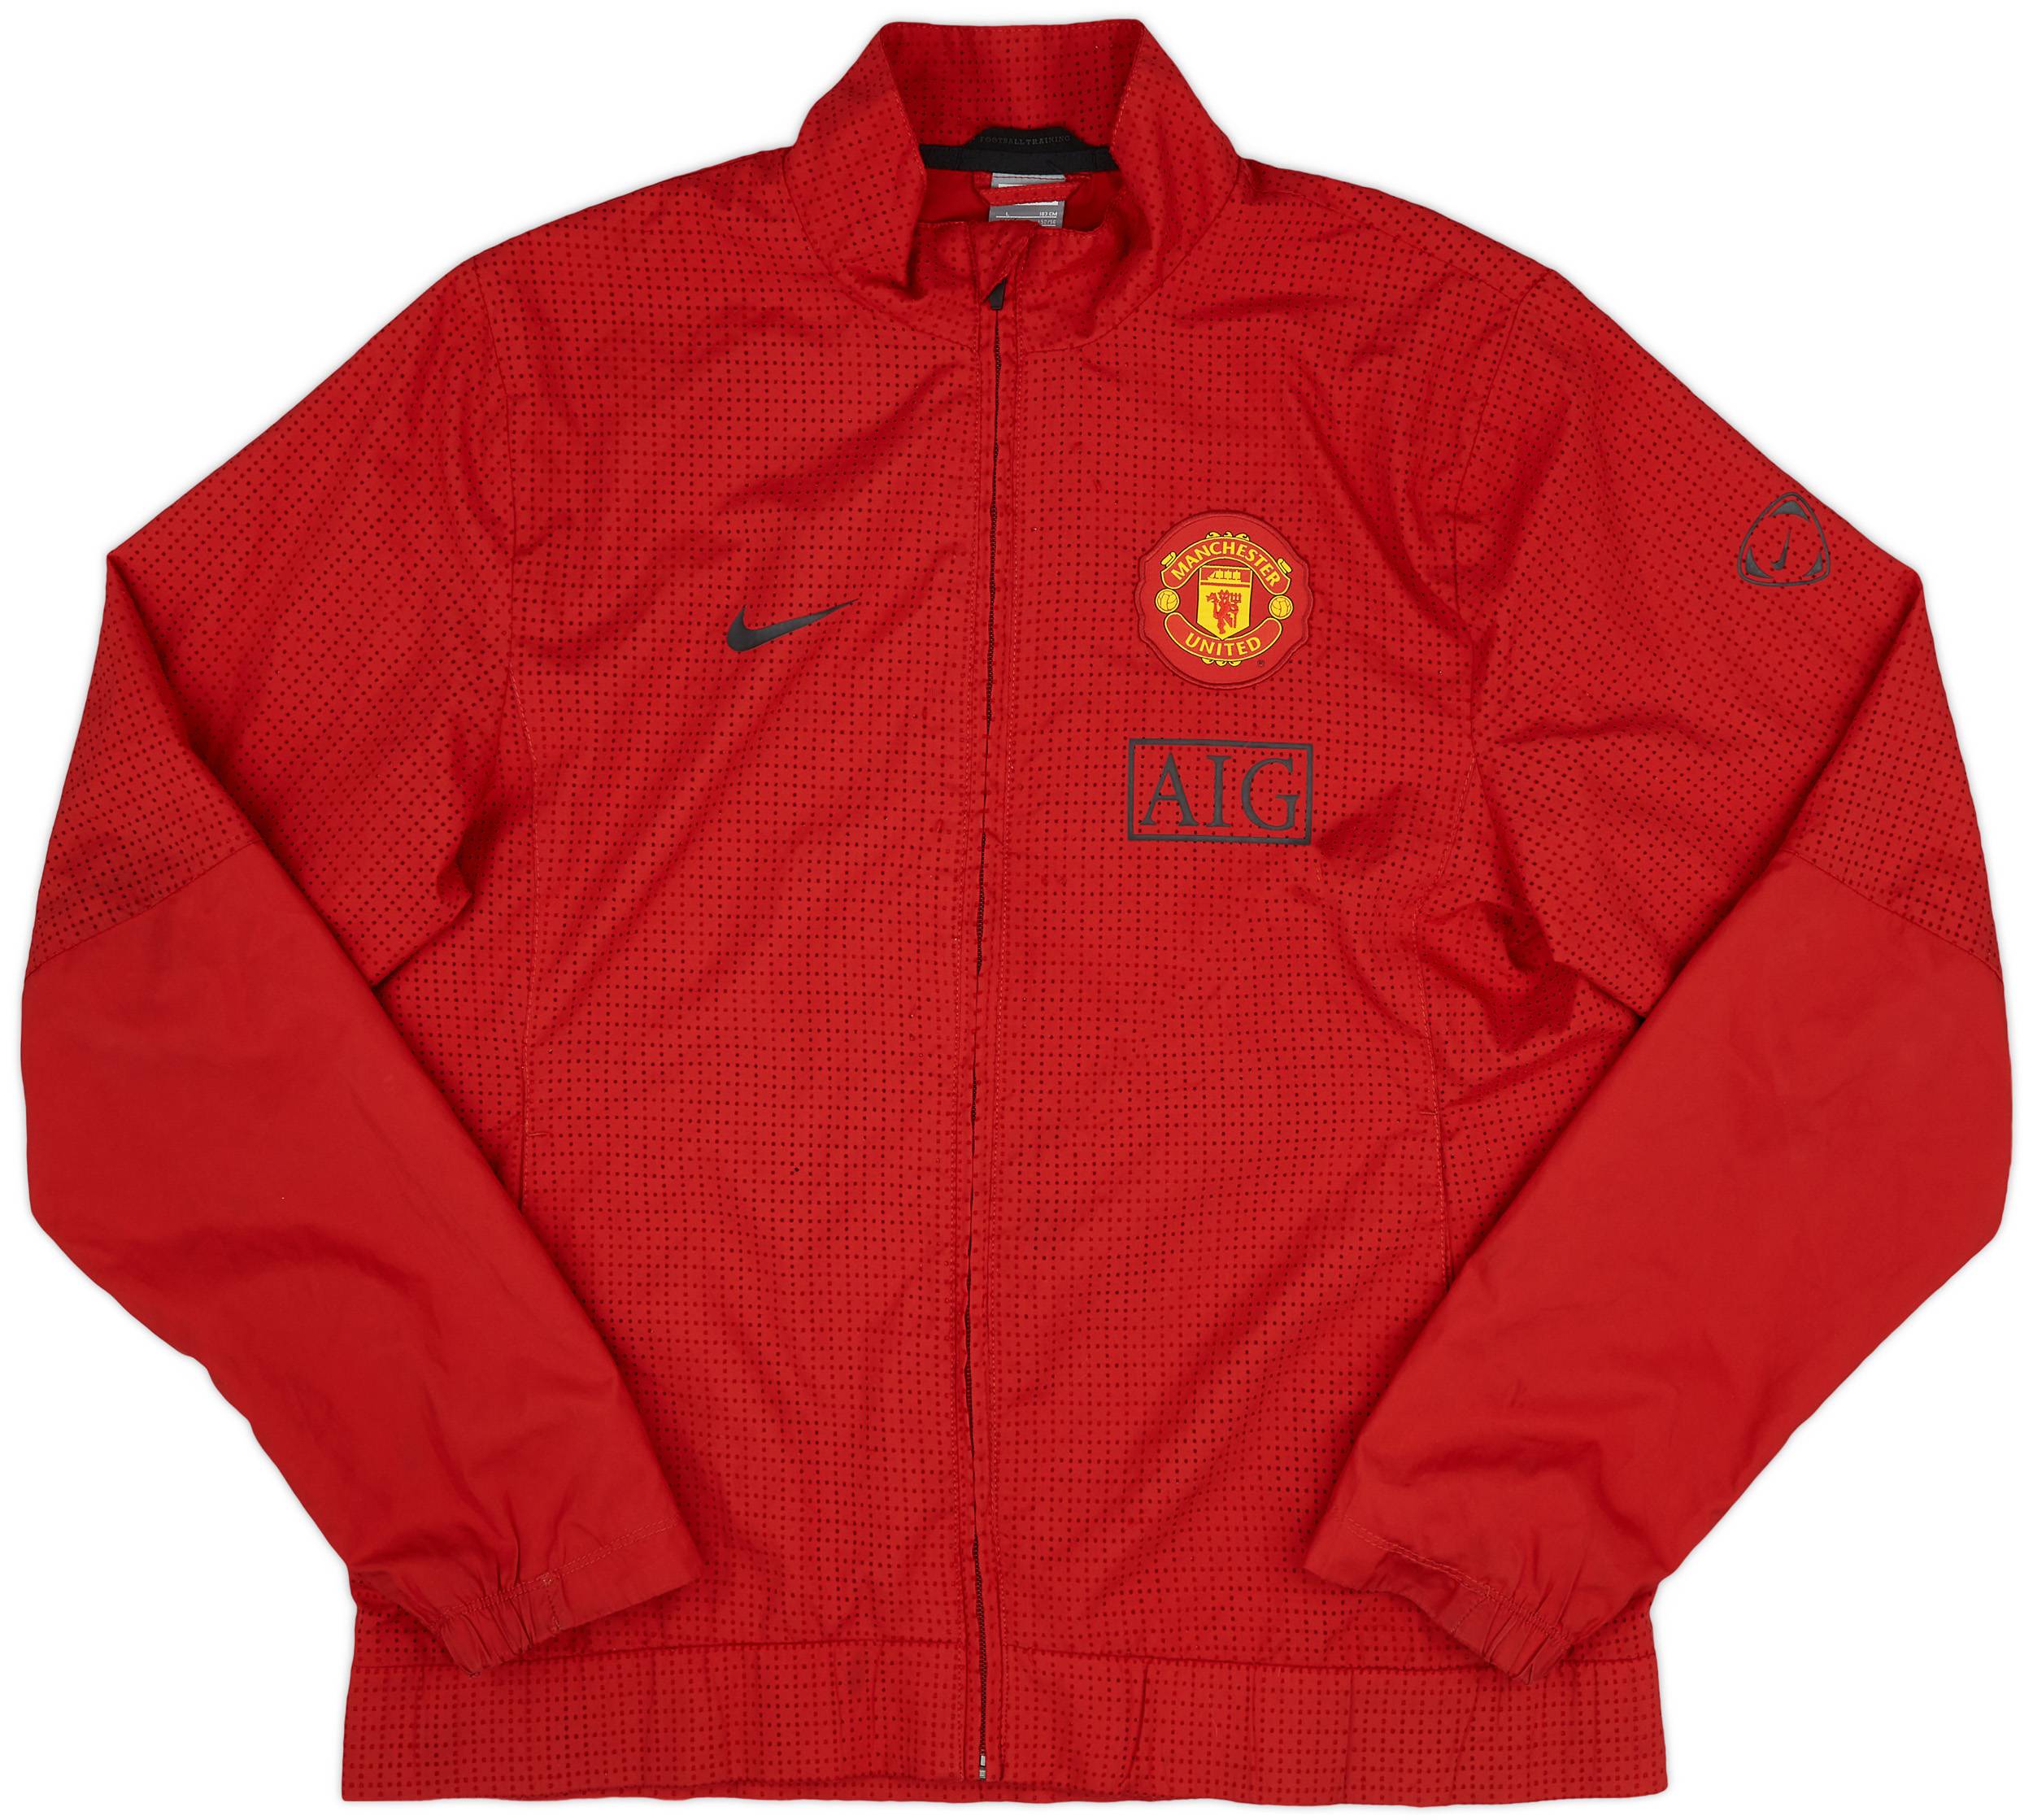 2009-10 Manchester United Nike Track Jacket - 8/10 - (L)